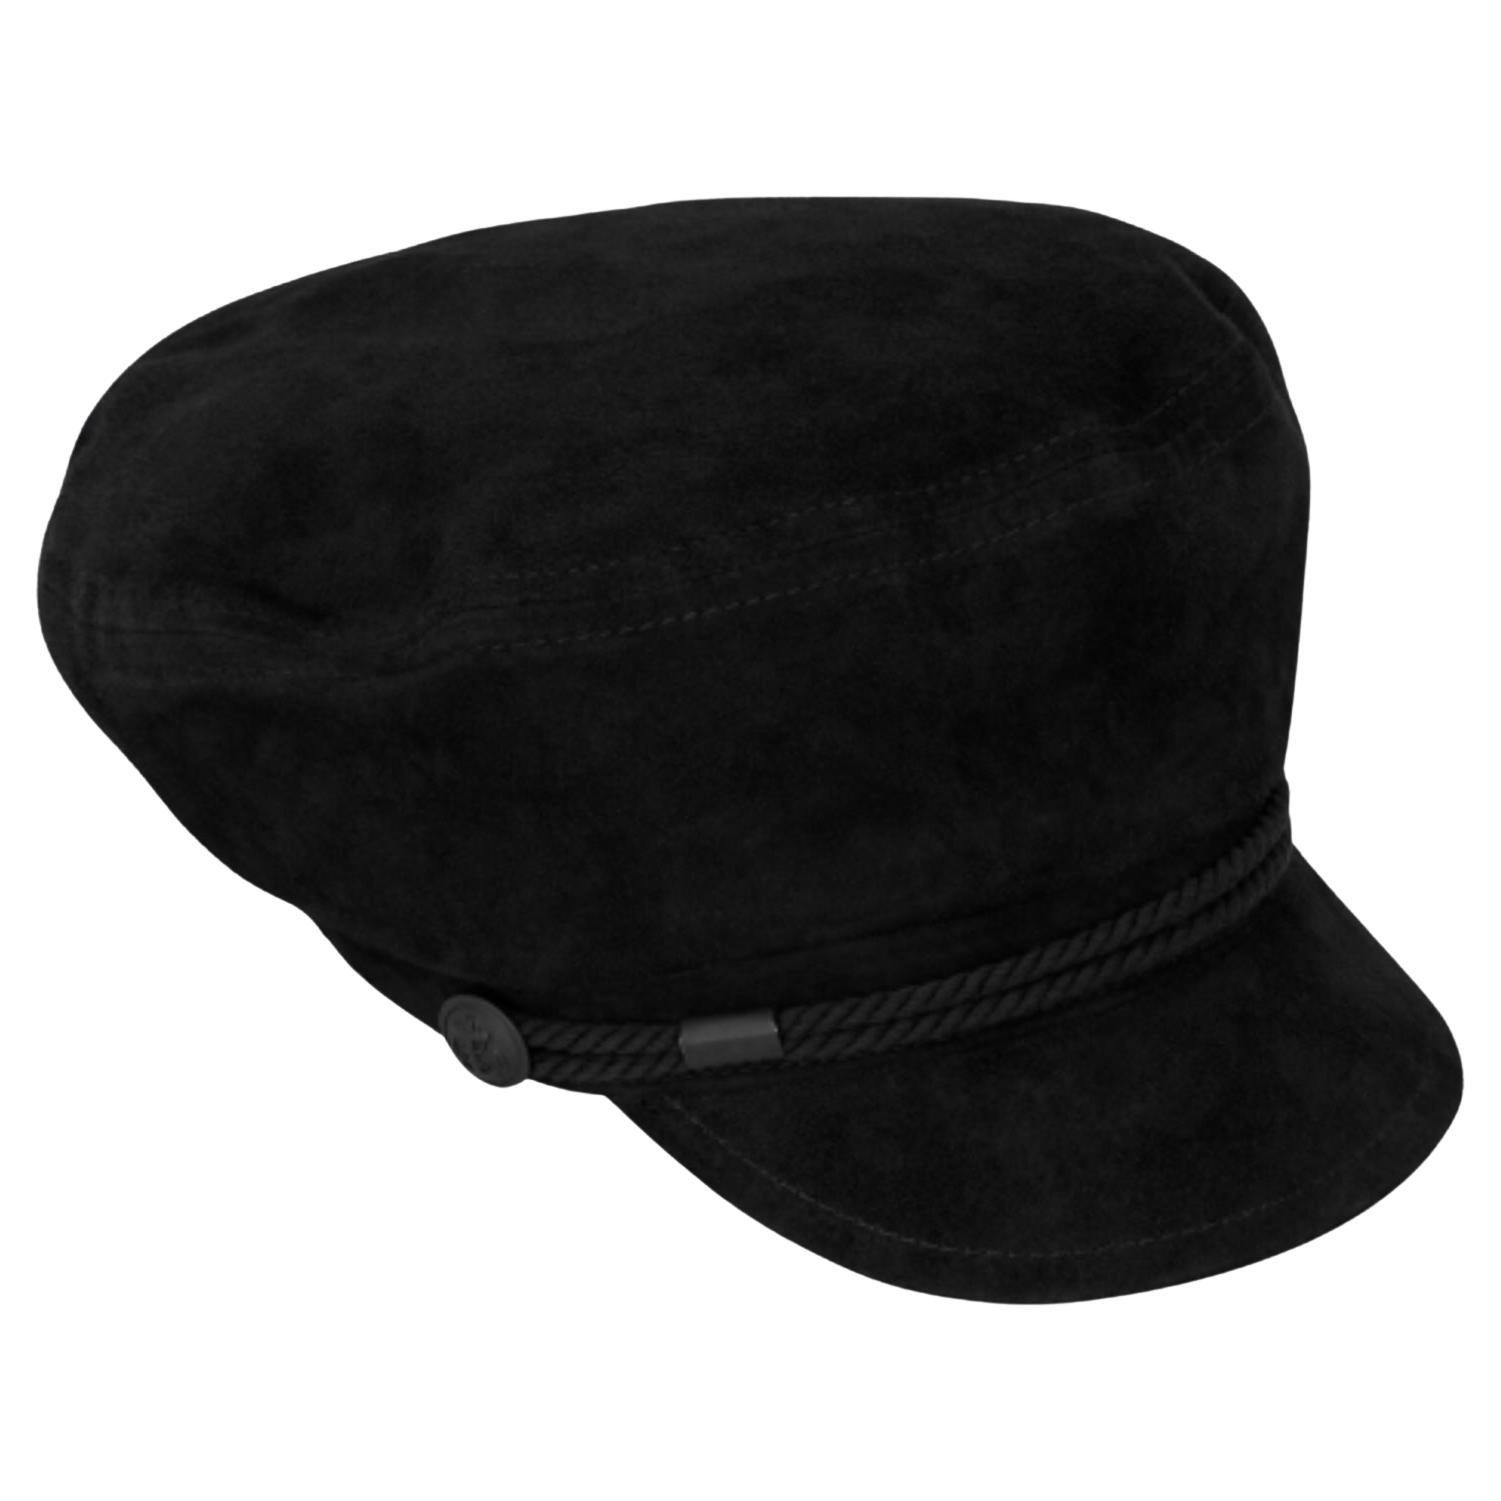 Saint Laurent Black Suede Sailor Cap Hat Size Medium